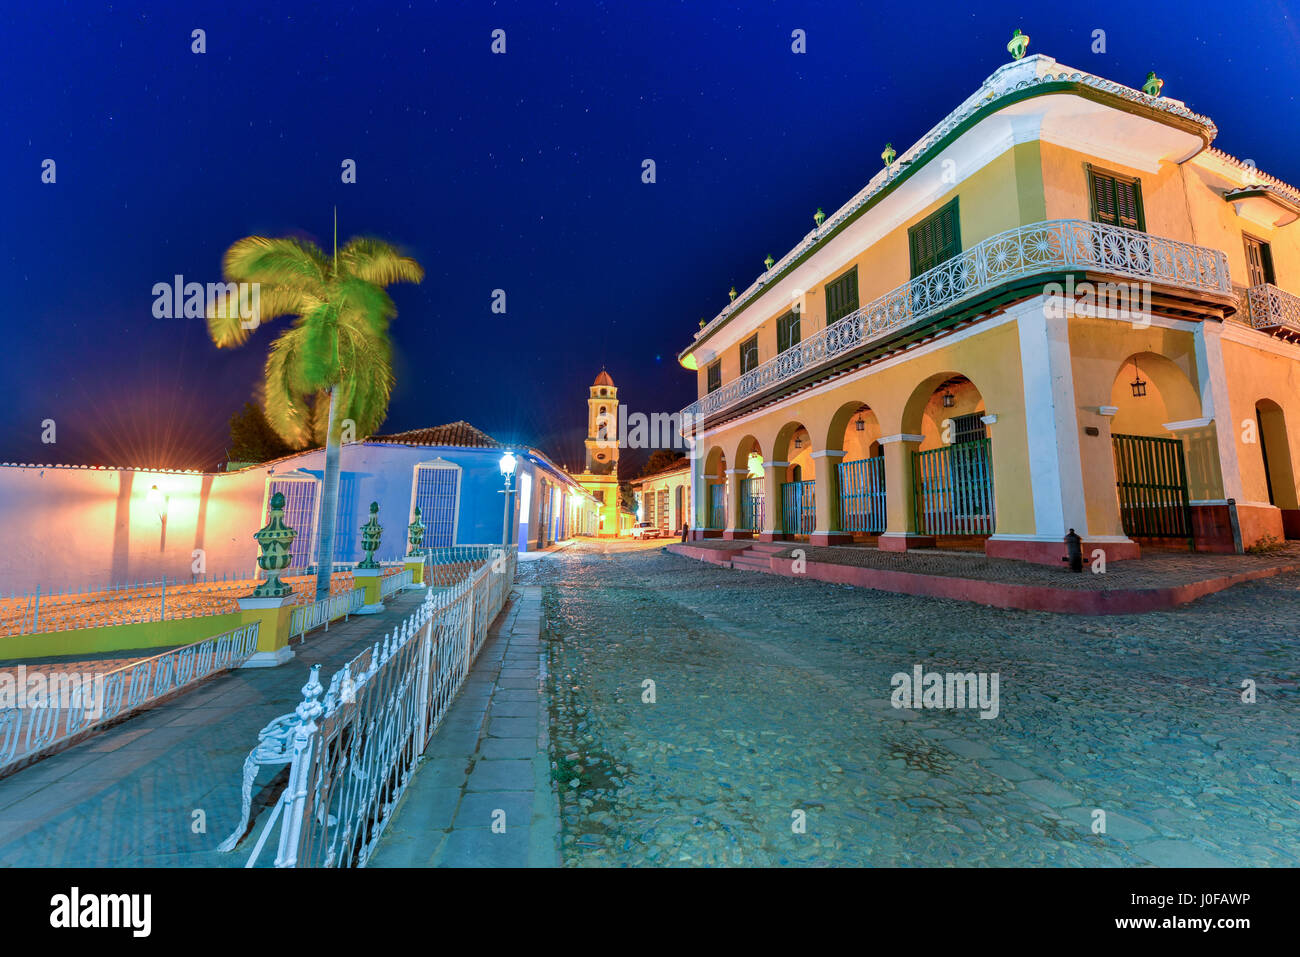 Palacio Brunet along the Plaza Mayor in the center of Trinidad, Cuba, a UNESCO world heritage site. Stock Photo